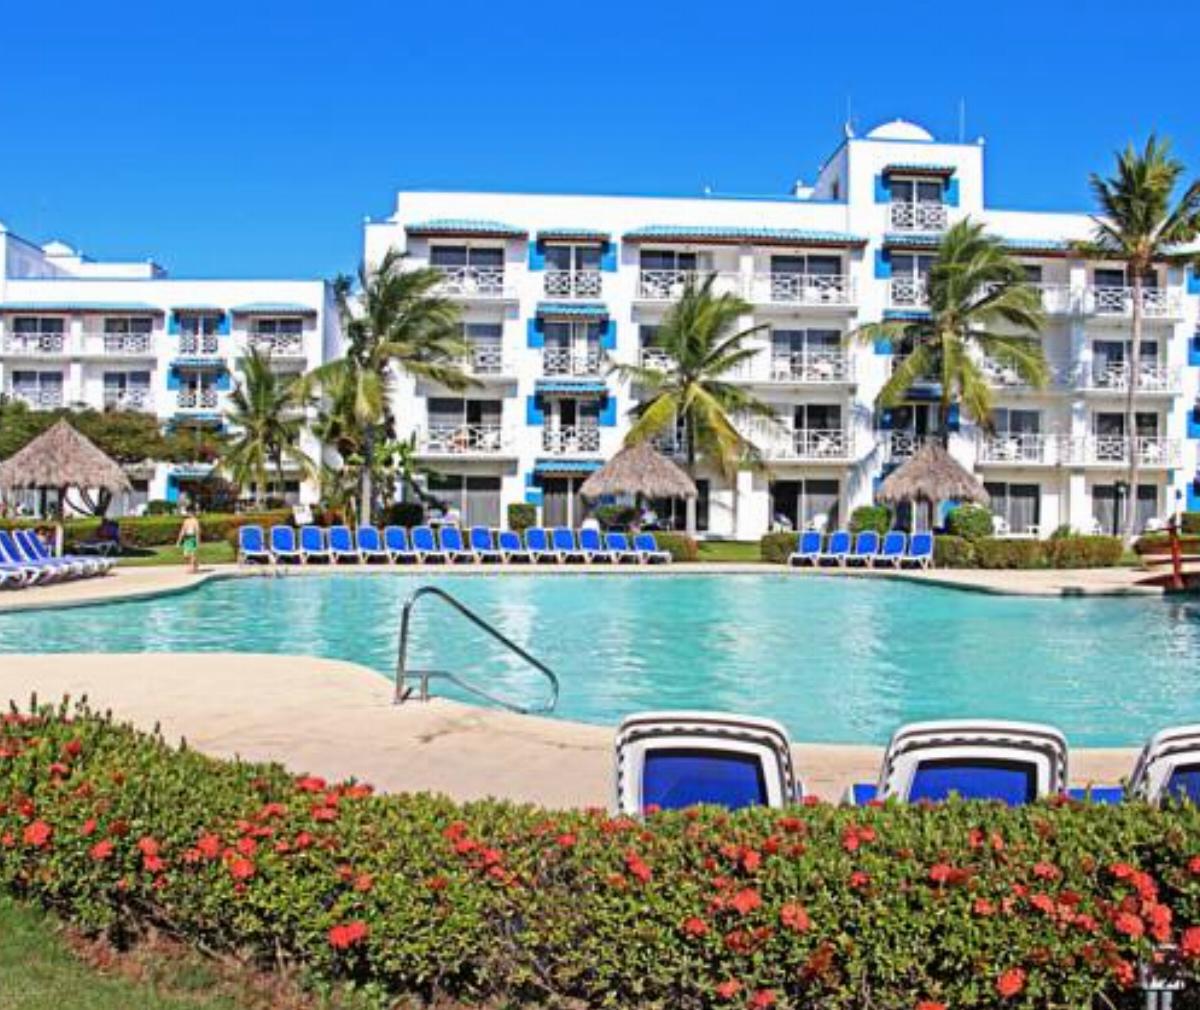 Playa Blanca Beach Resort - All Inclusive Hotel Playa Blanca Panama